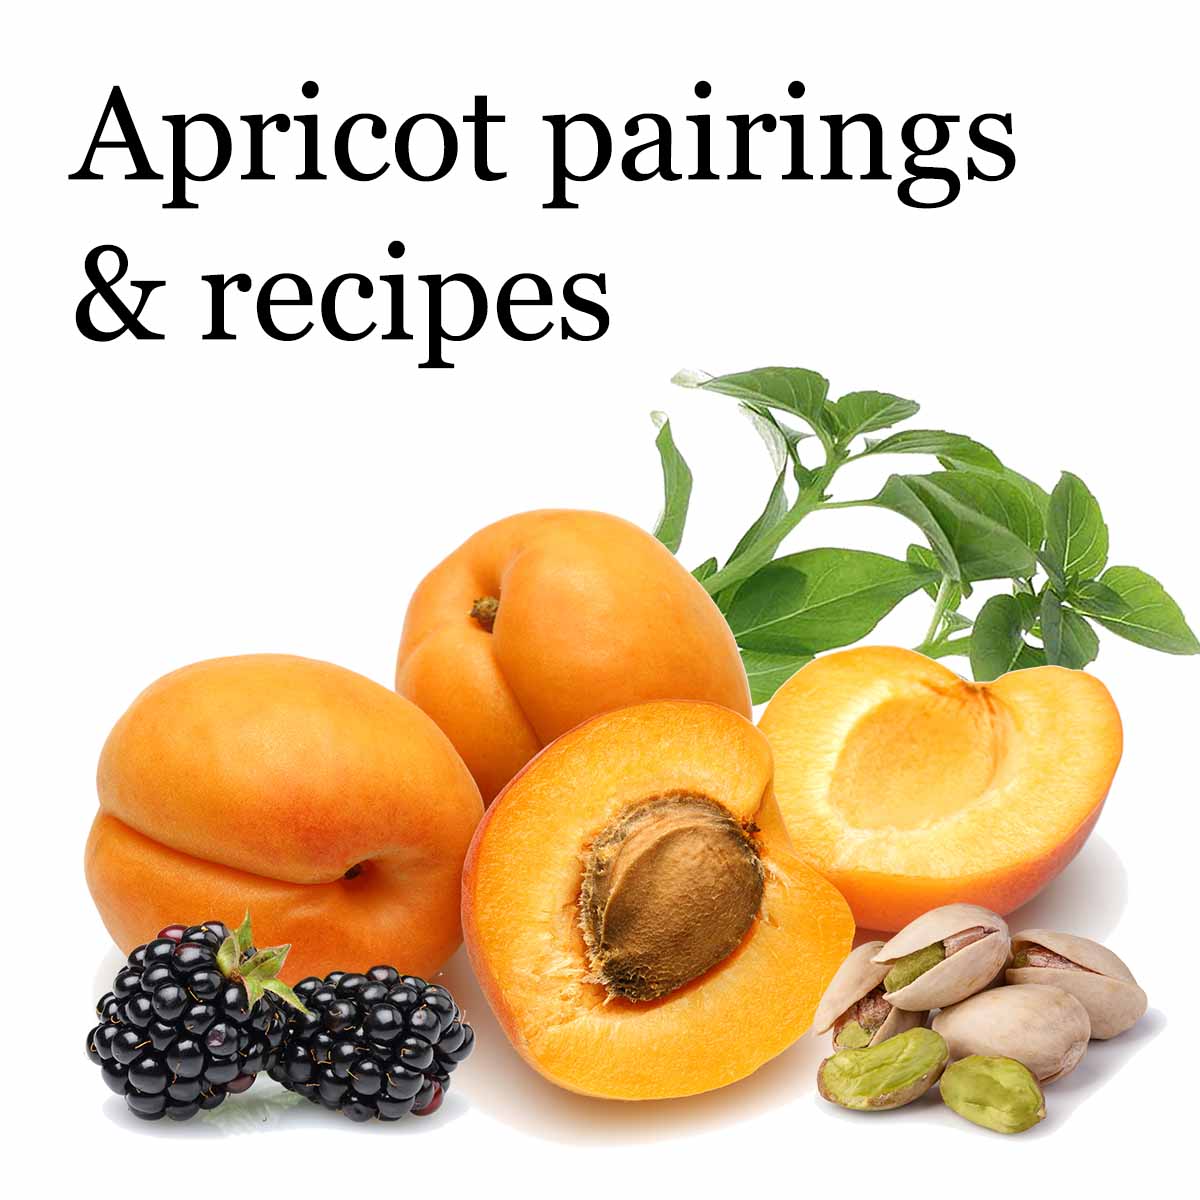 apricot pairings: blackberries, nuts, and basil